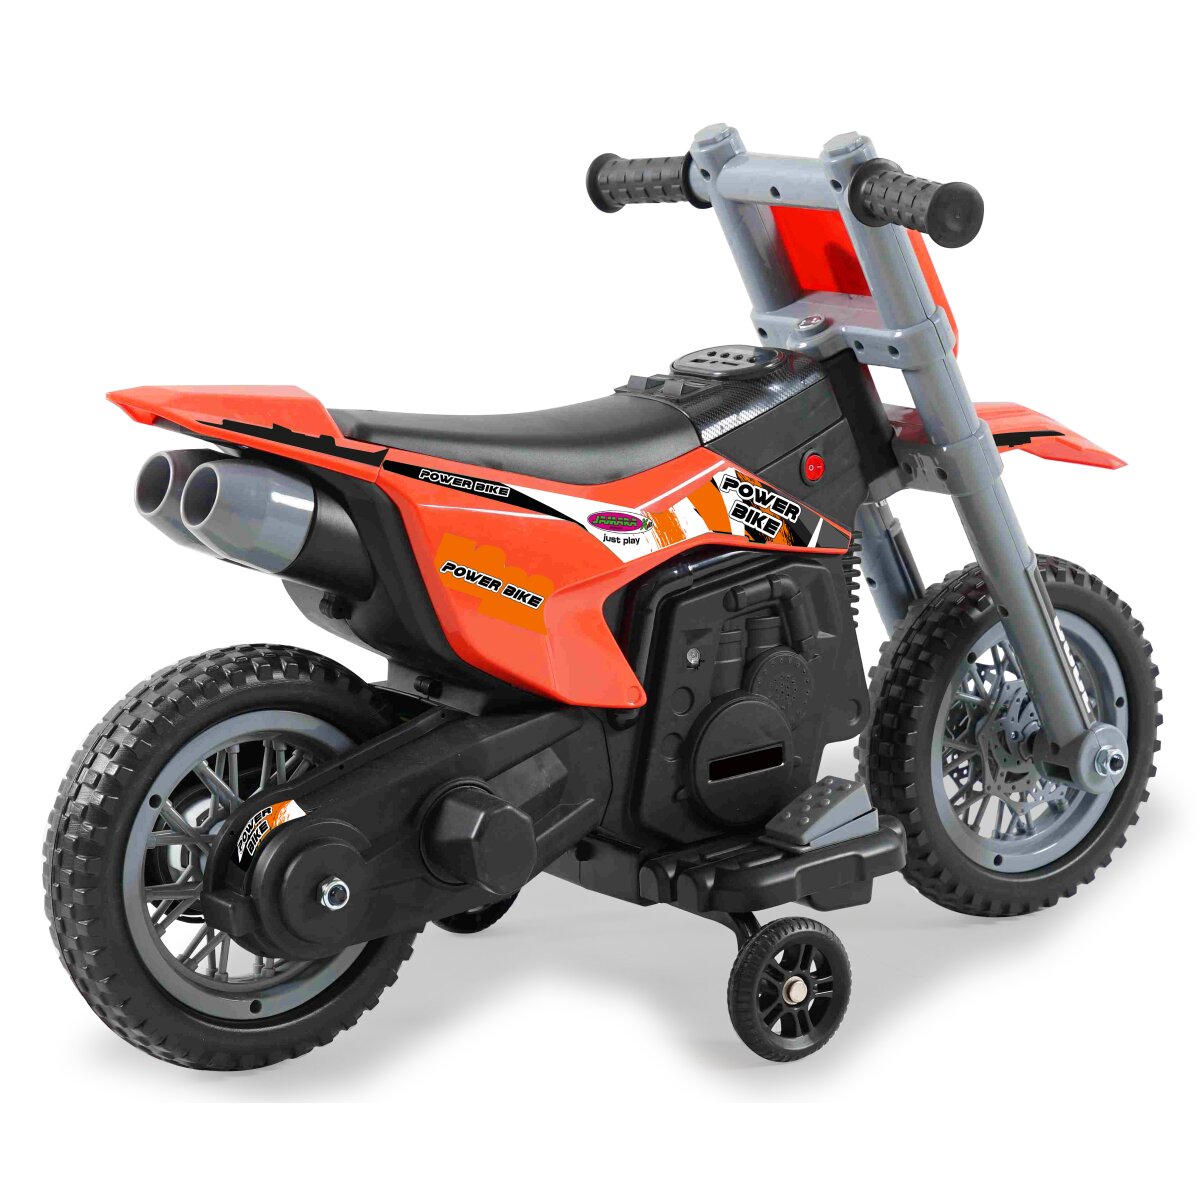 Ride-on Motorrad Power Bike orange 6V